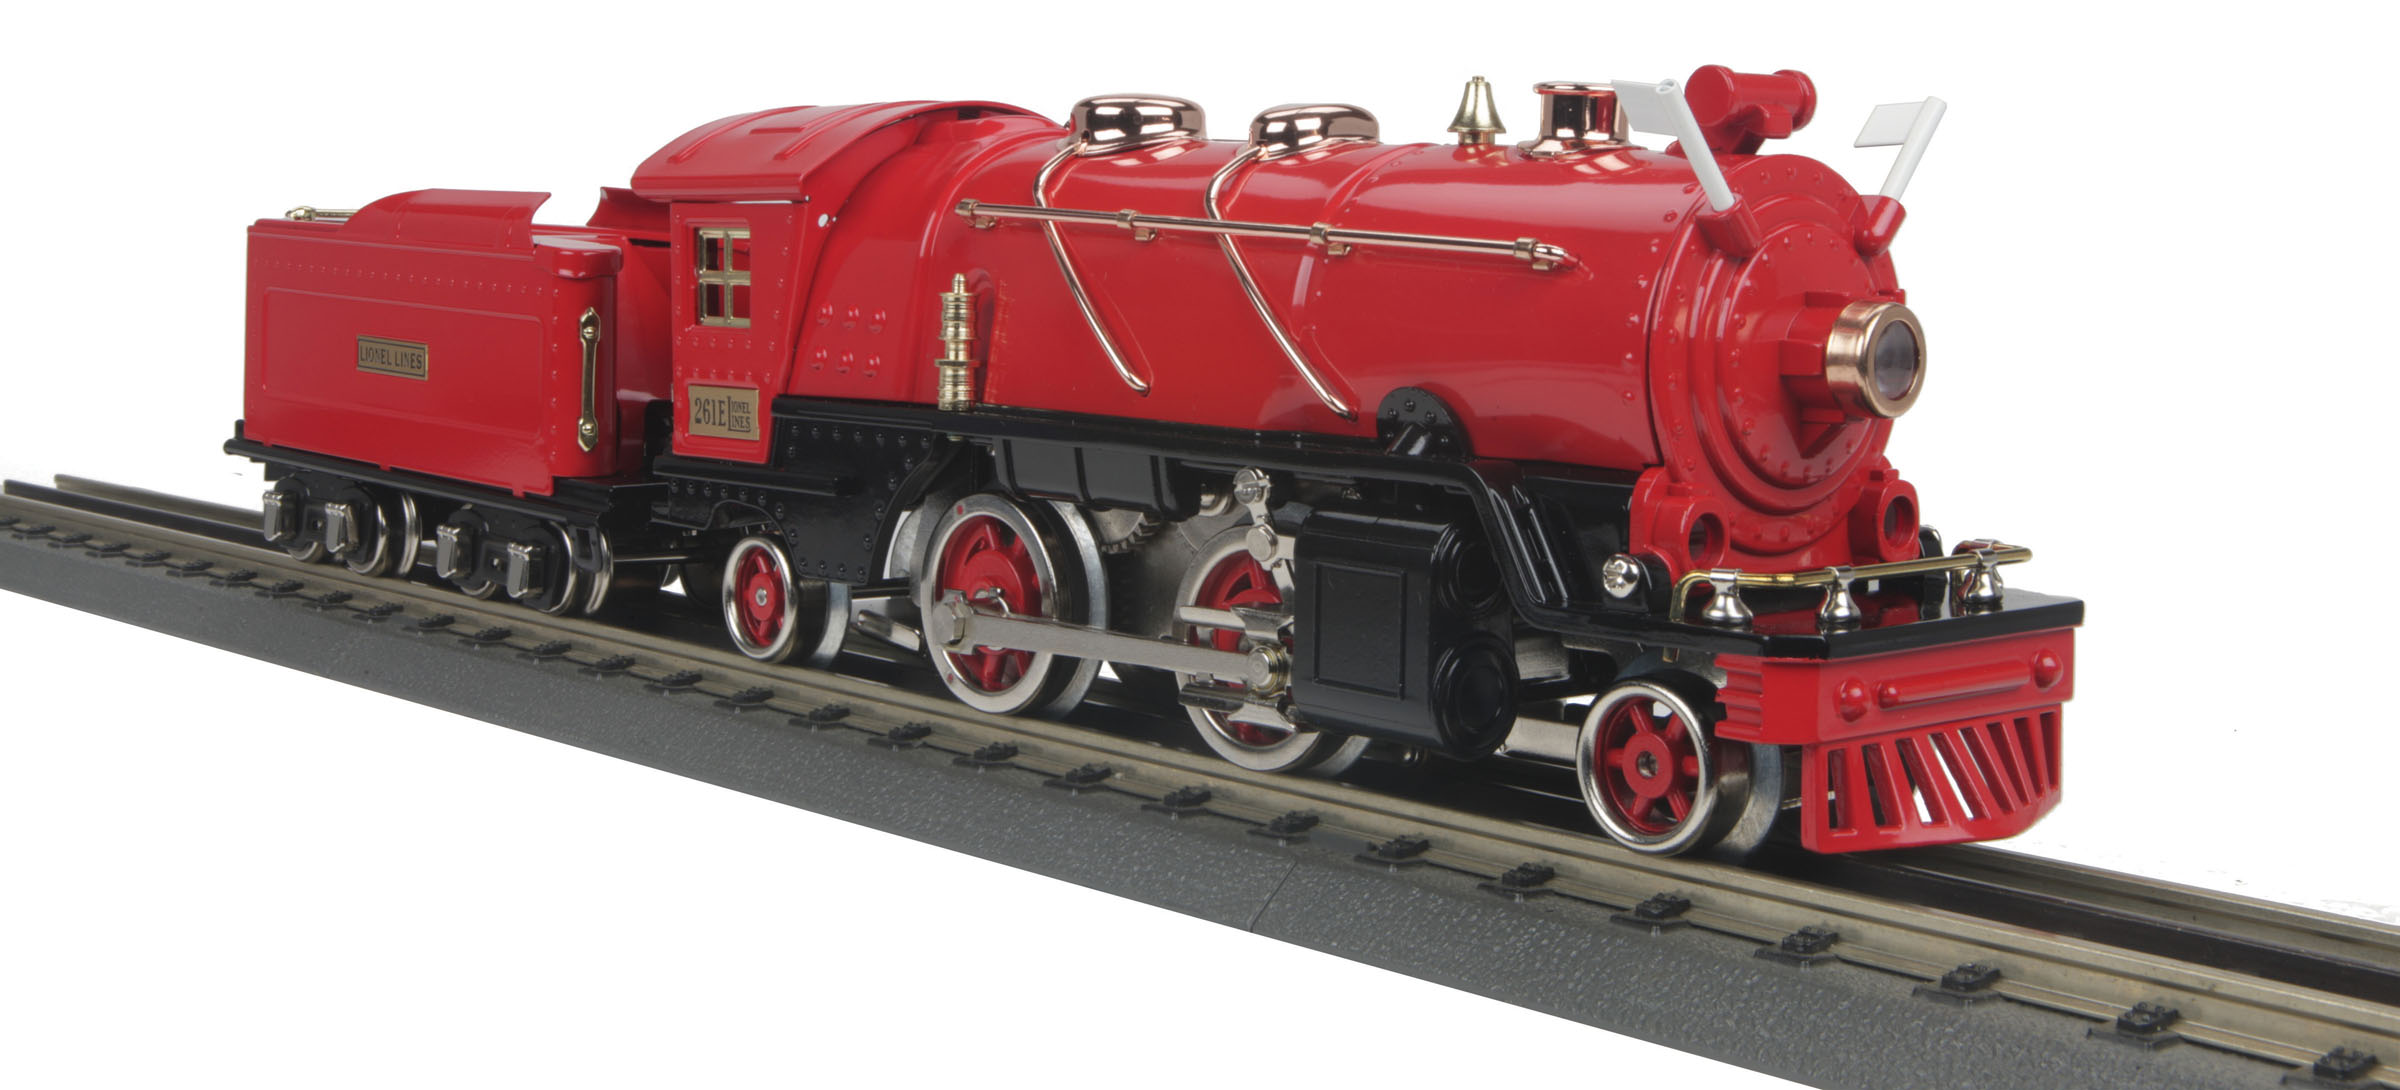 Lionel Corporation - Steam Locomotive | MTH ELECTRIC TRAINS